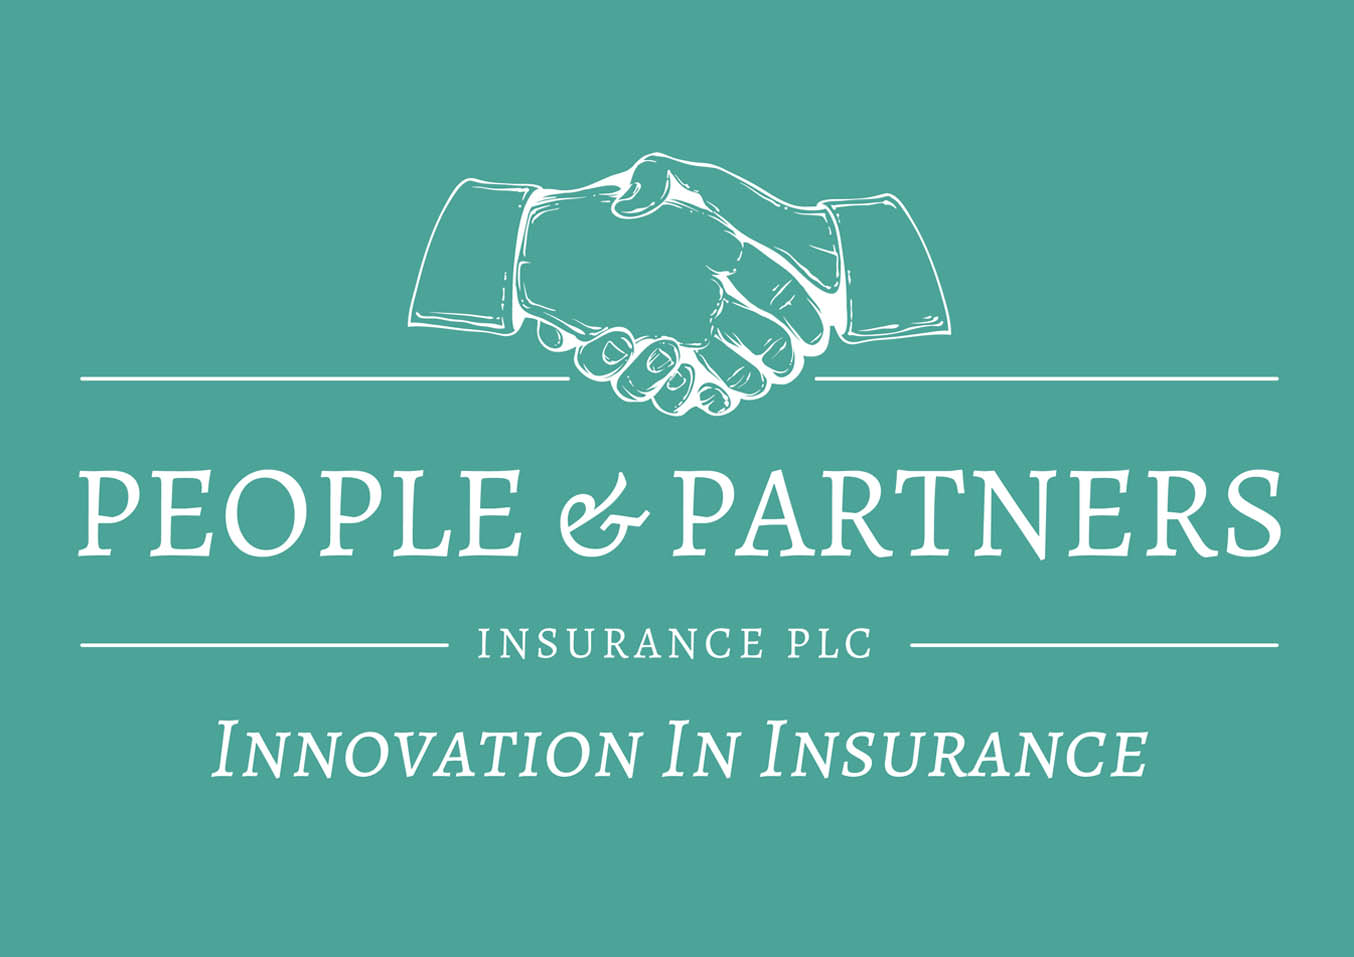 People & Partner Insurance